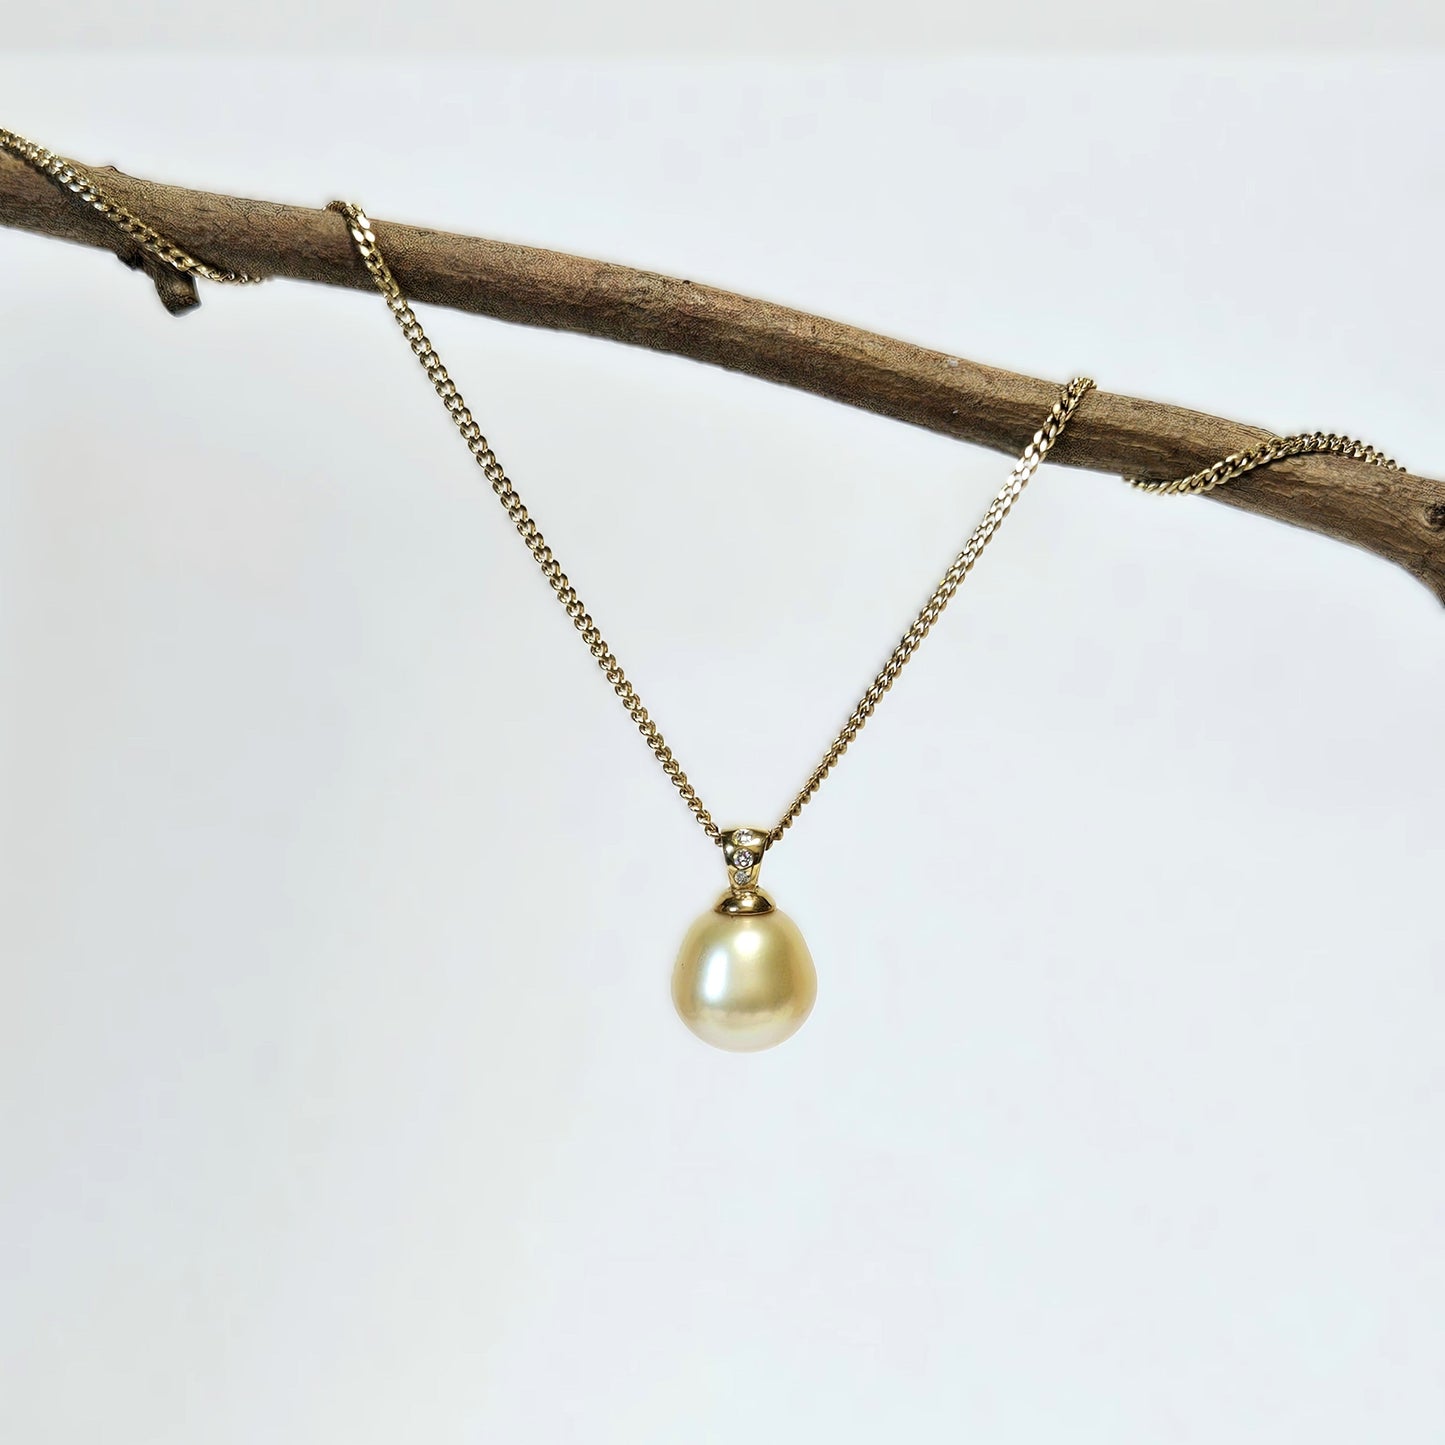 Golden pearl pendant